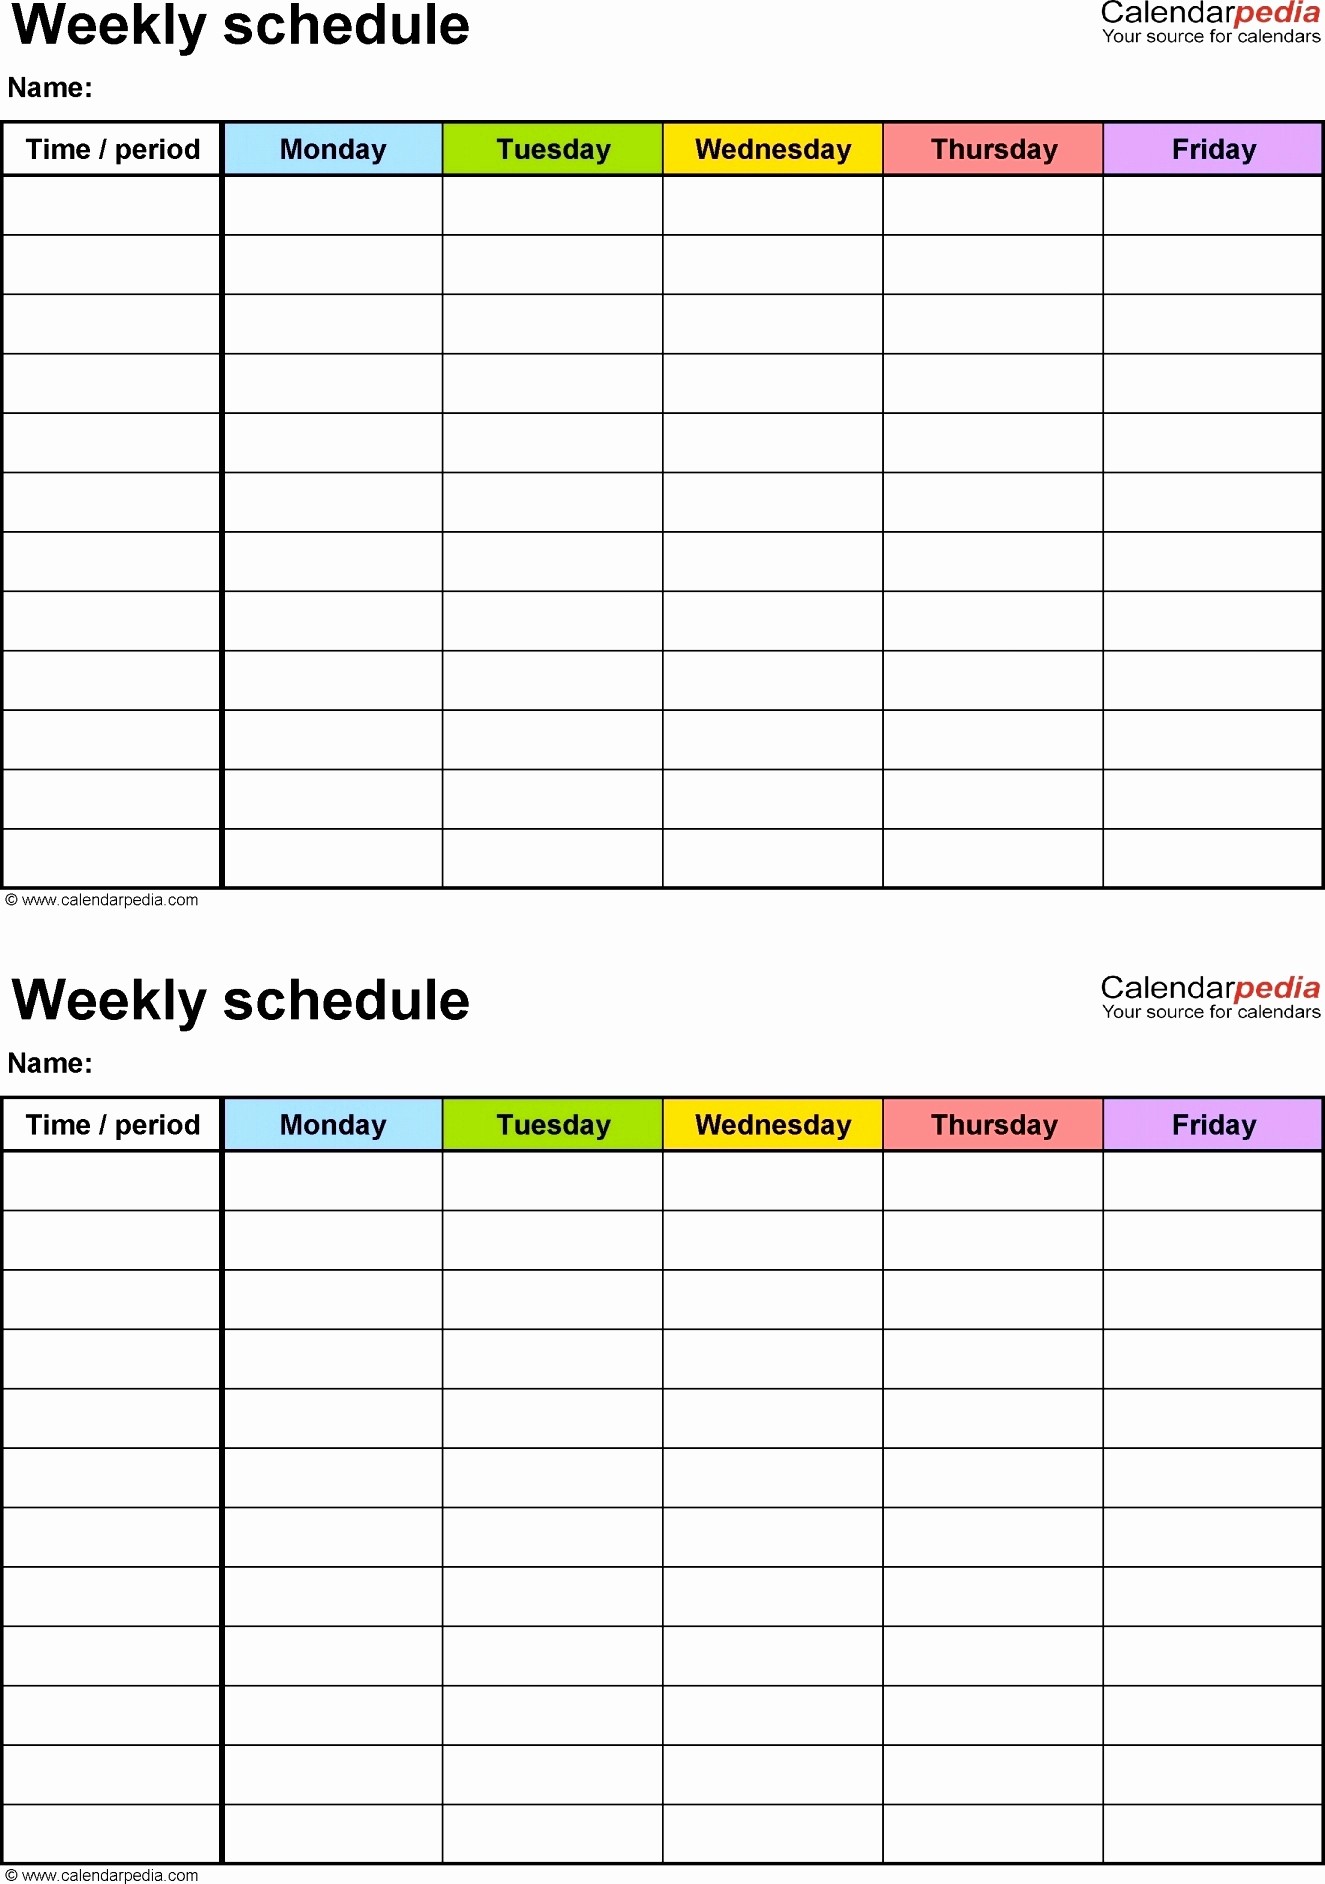 50 New Google Docs Calendar Spreadsheet Template DOCUMENTS IDEAS Document